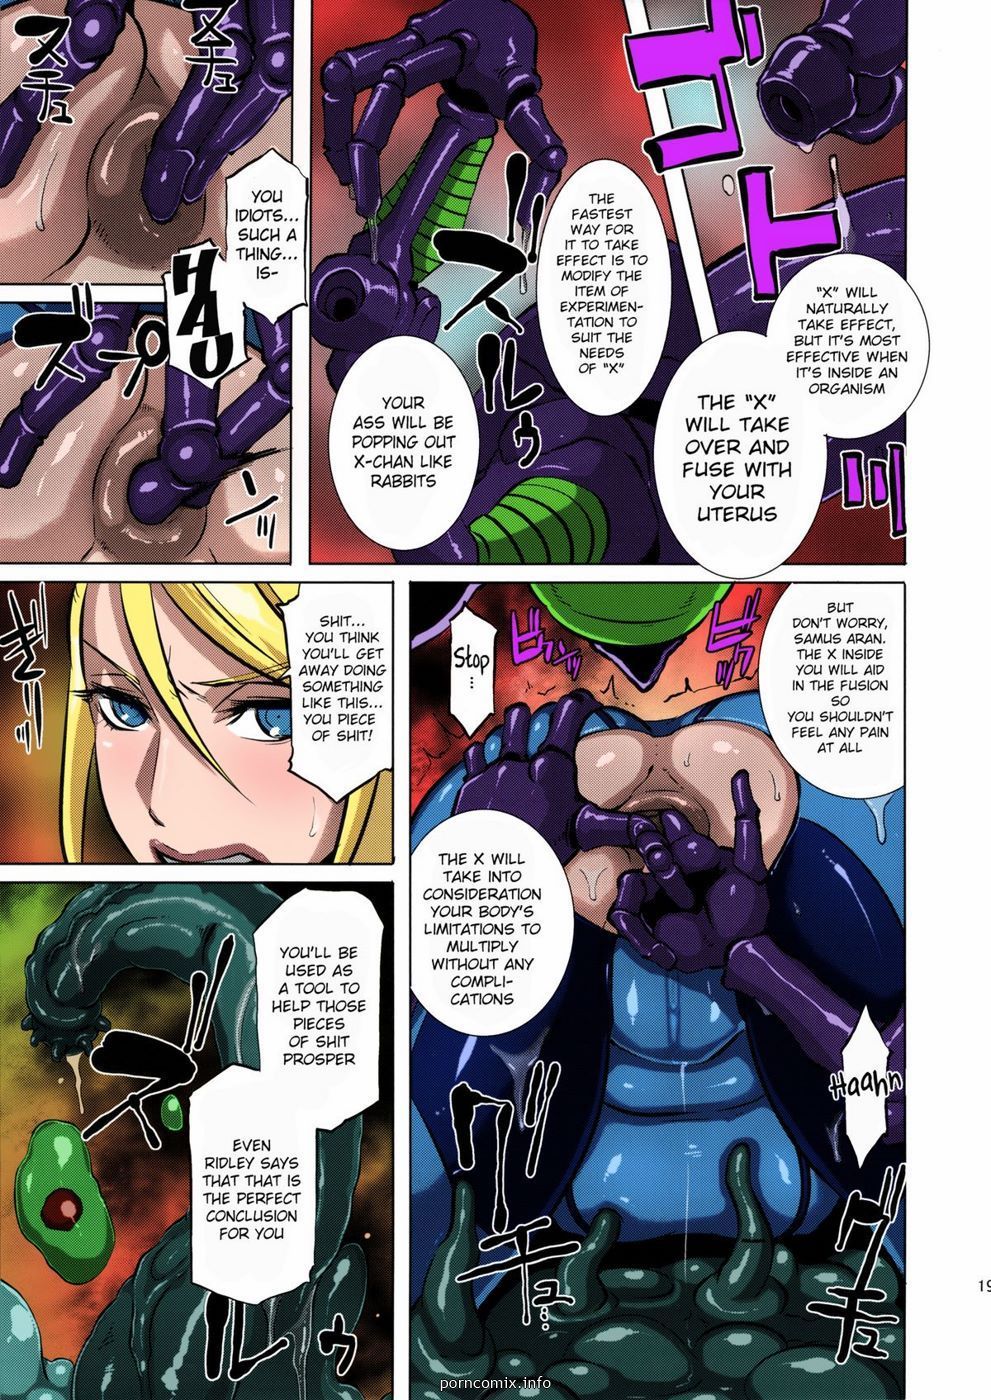 Samus And Pit Hentai - samus metroid butcha u part hentai comics 3 - XXXPicz